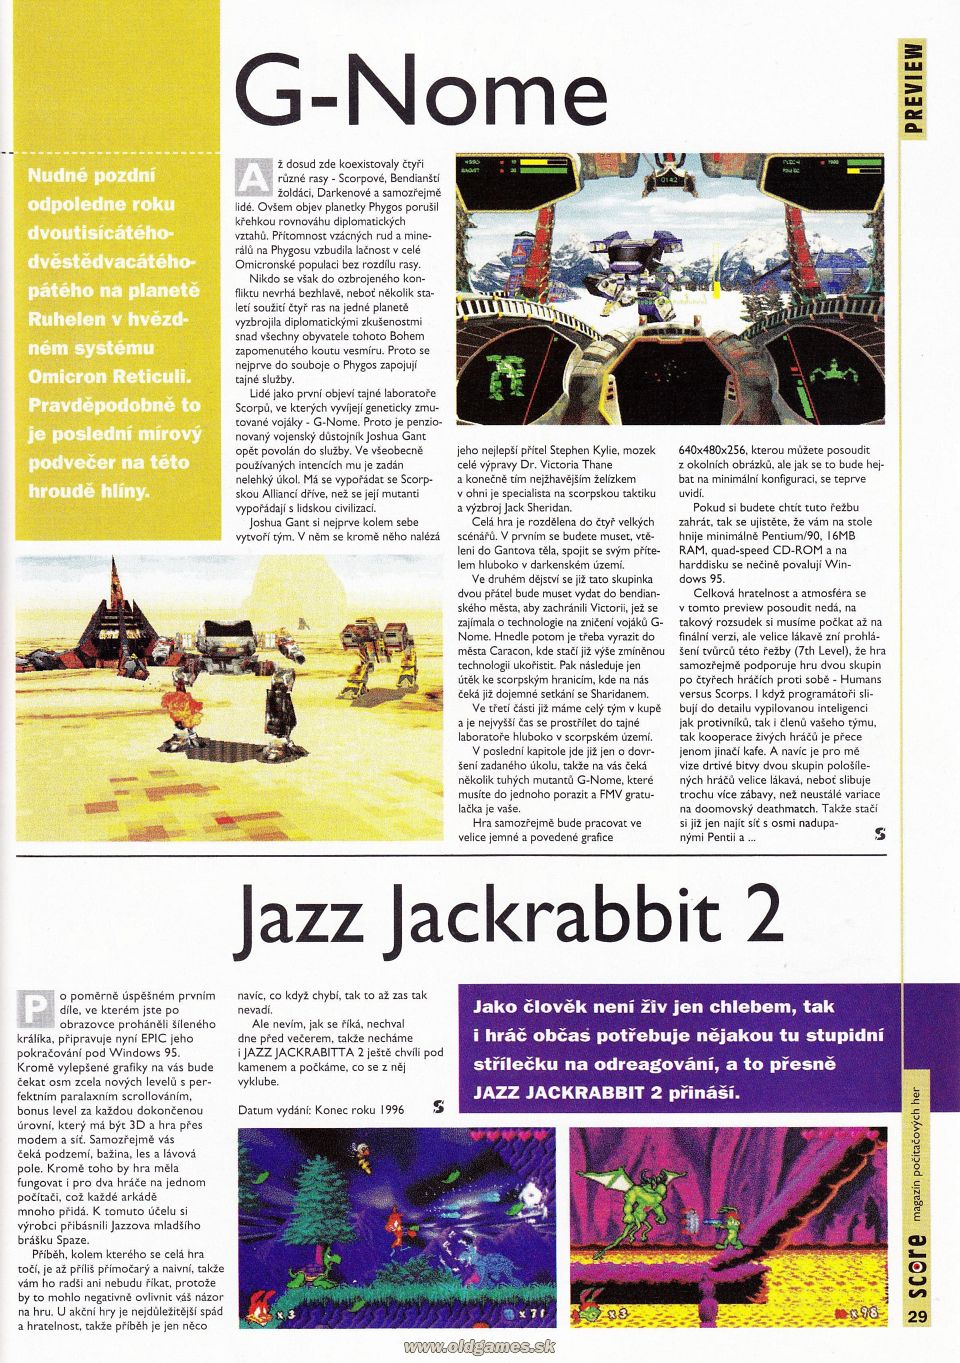 Preview: G-Nome, Jazz Jackrabbit 2